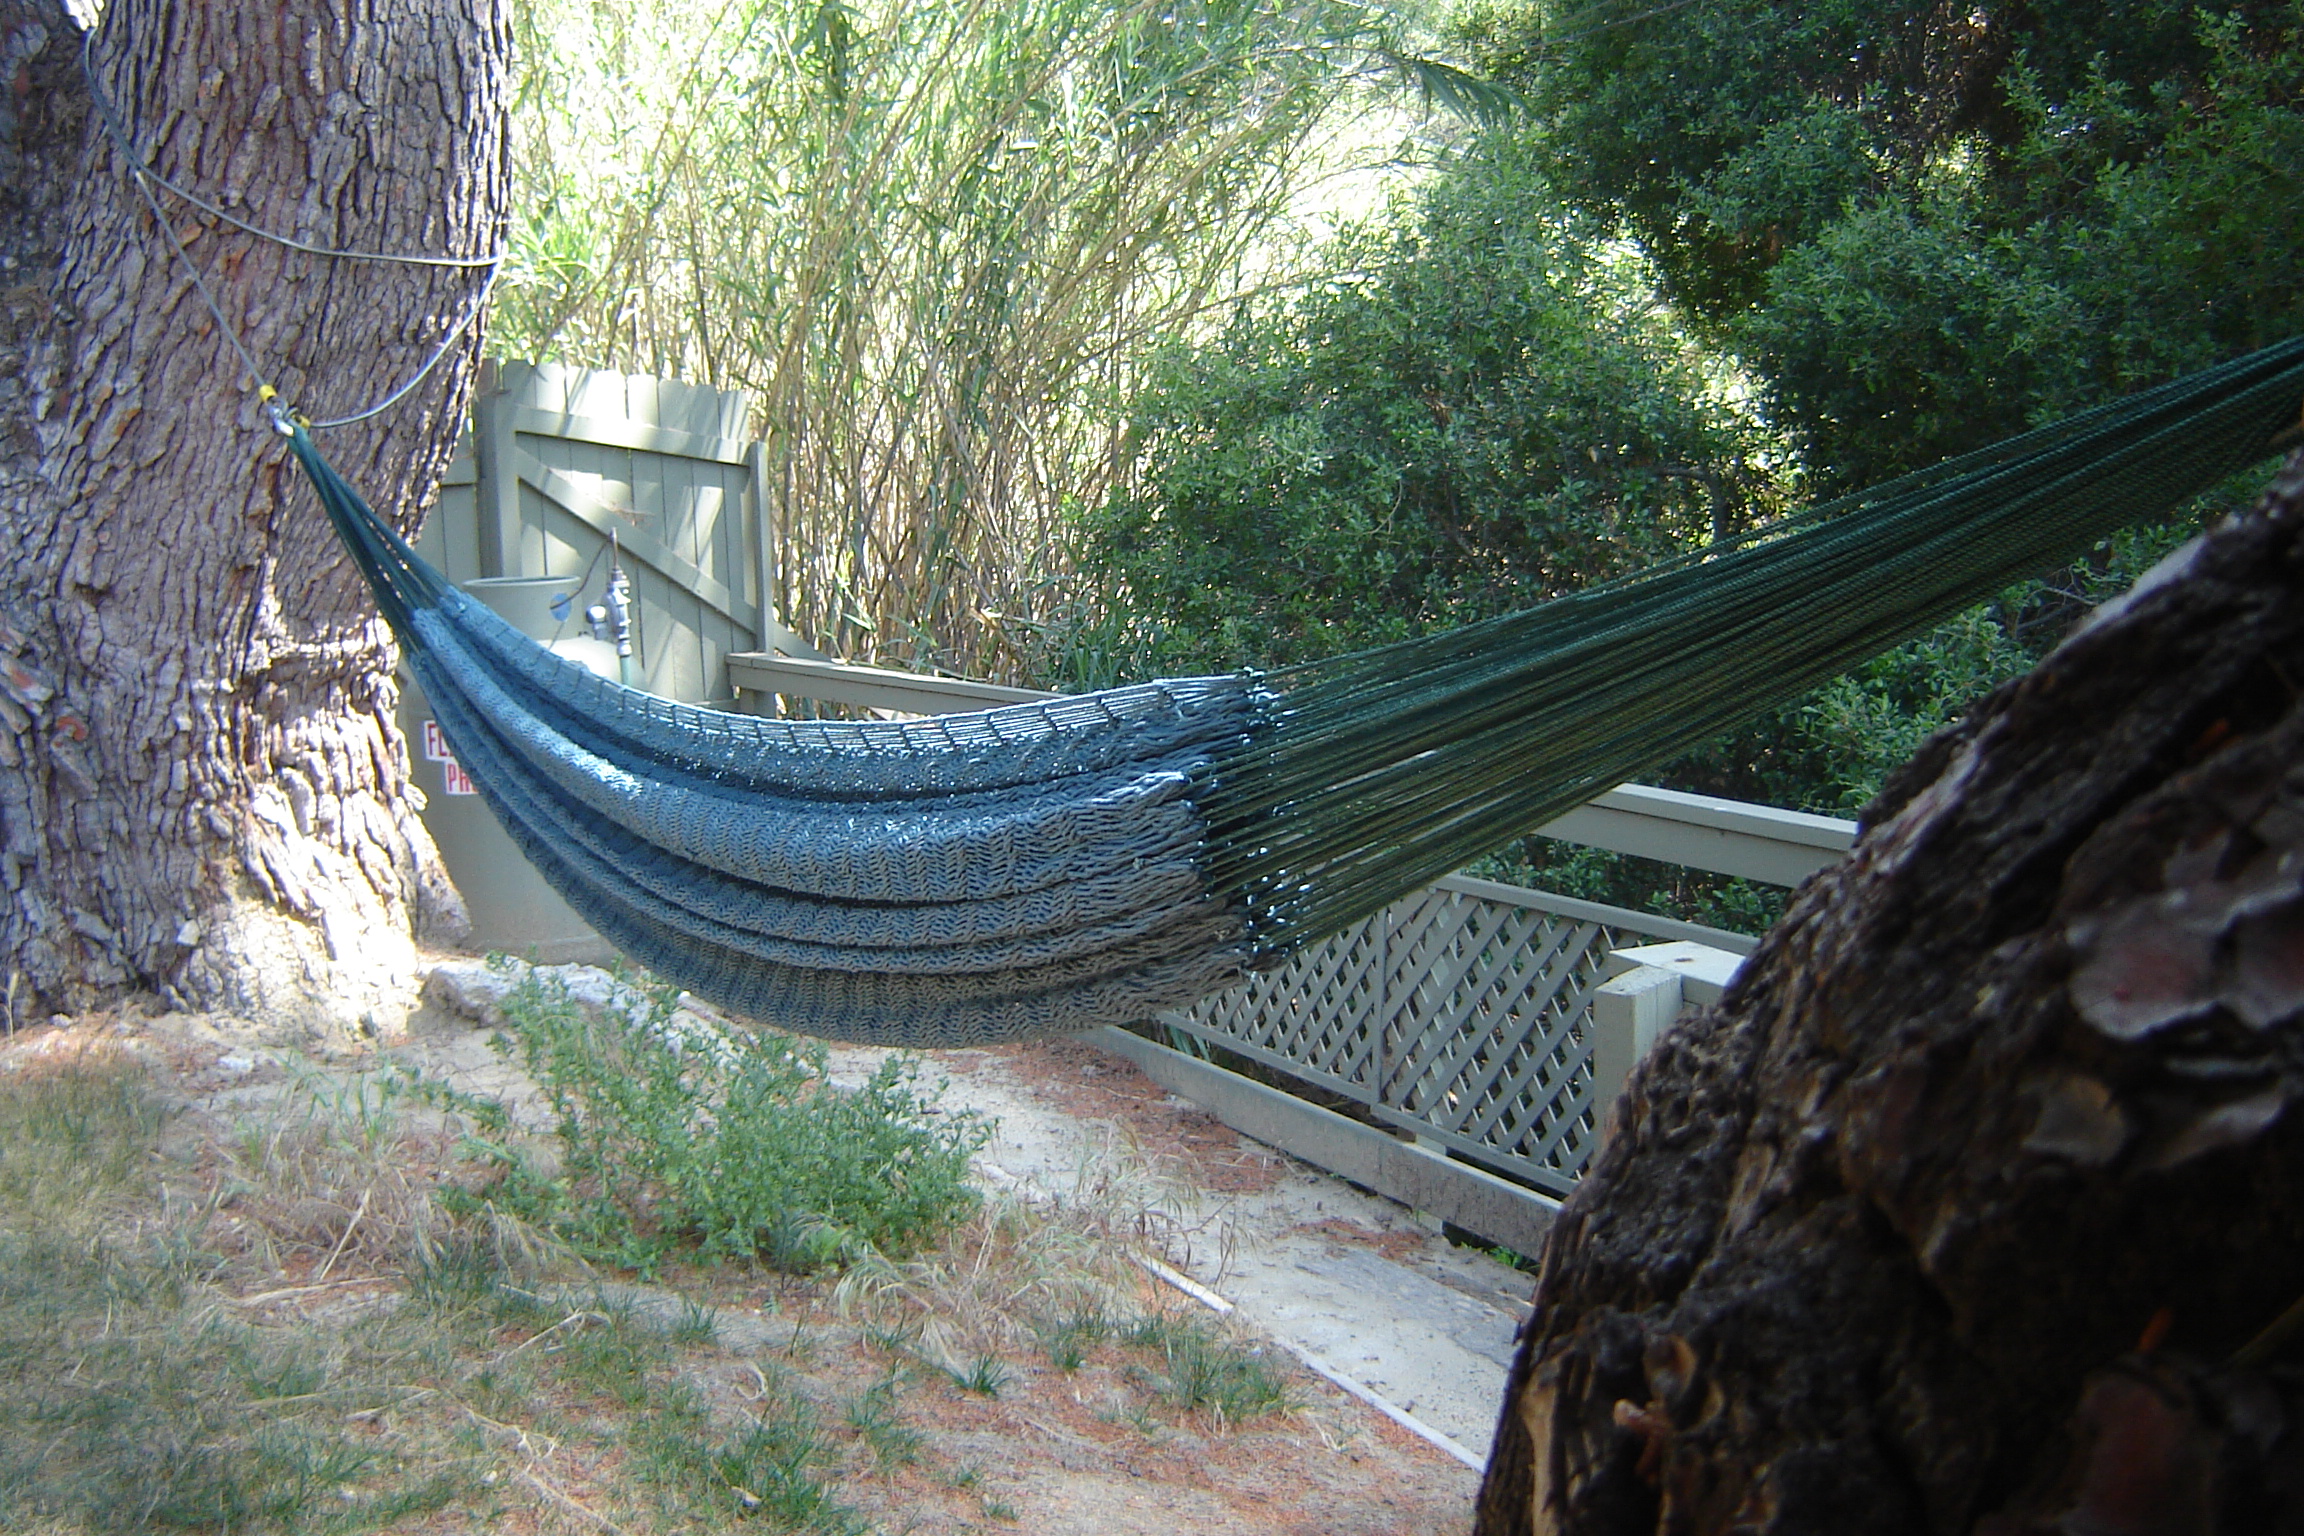 Chris' sister sent a great hammock.